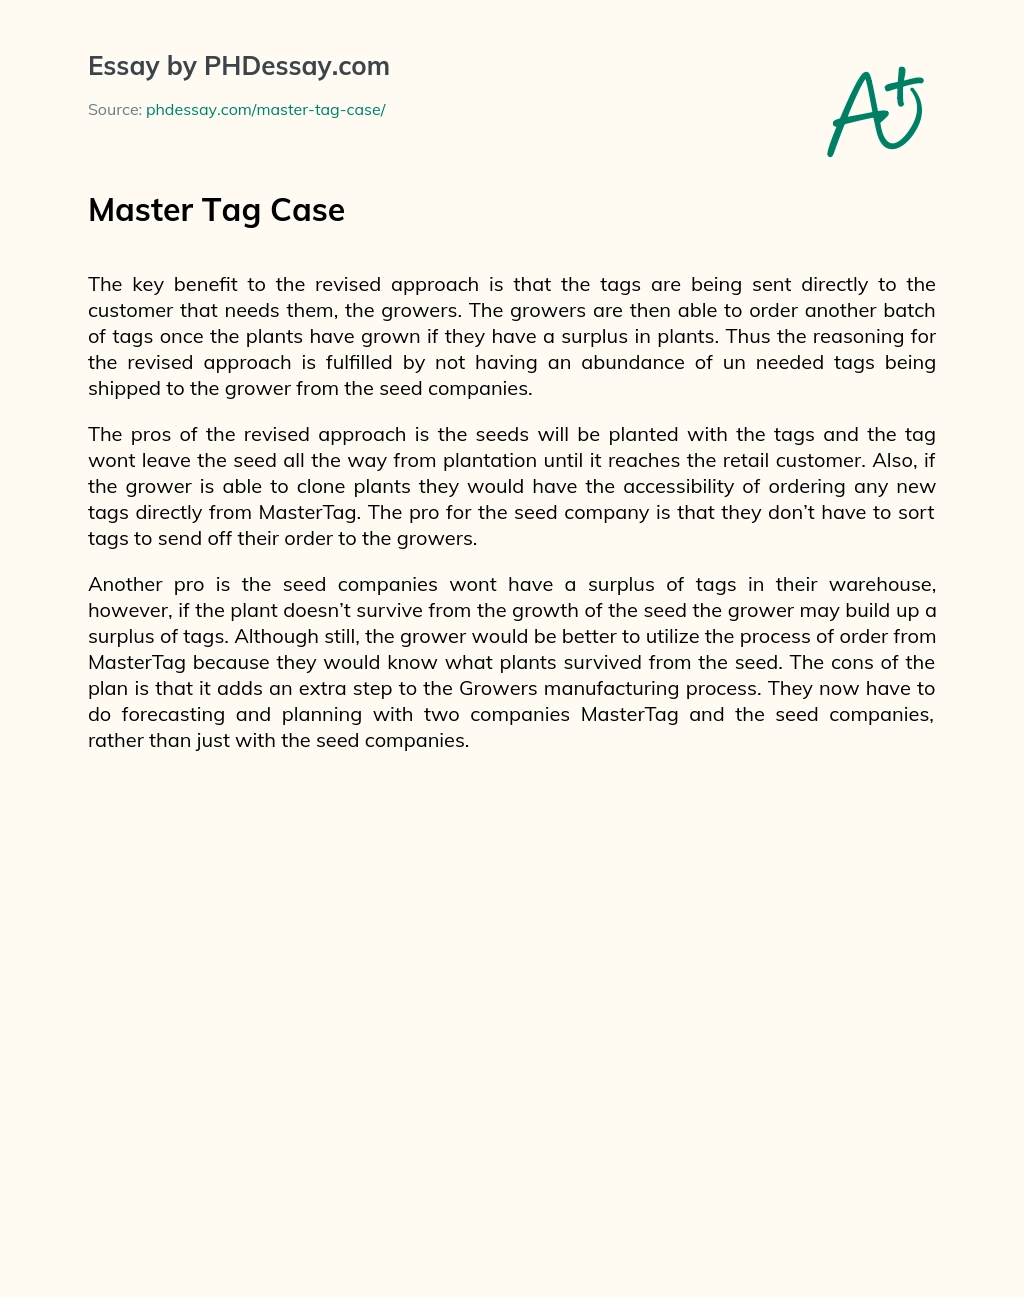 Master Tag Case essay